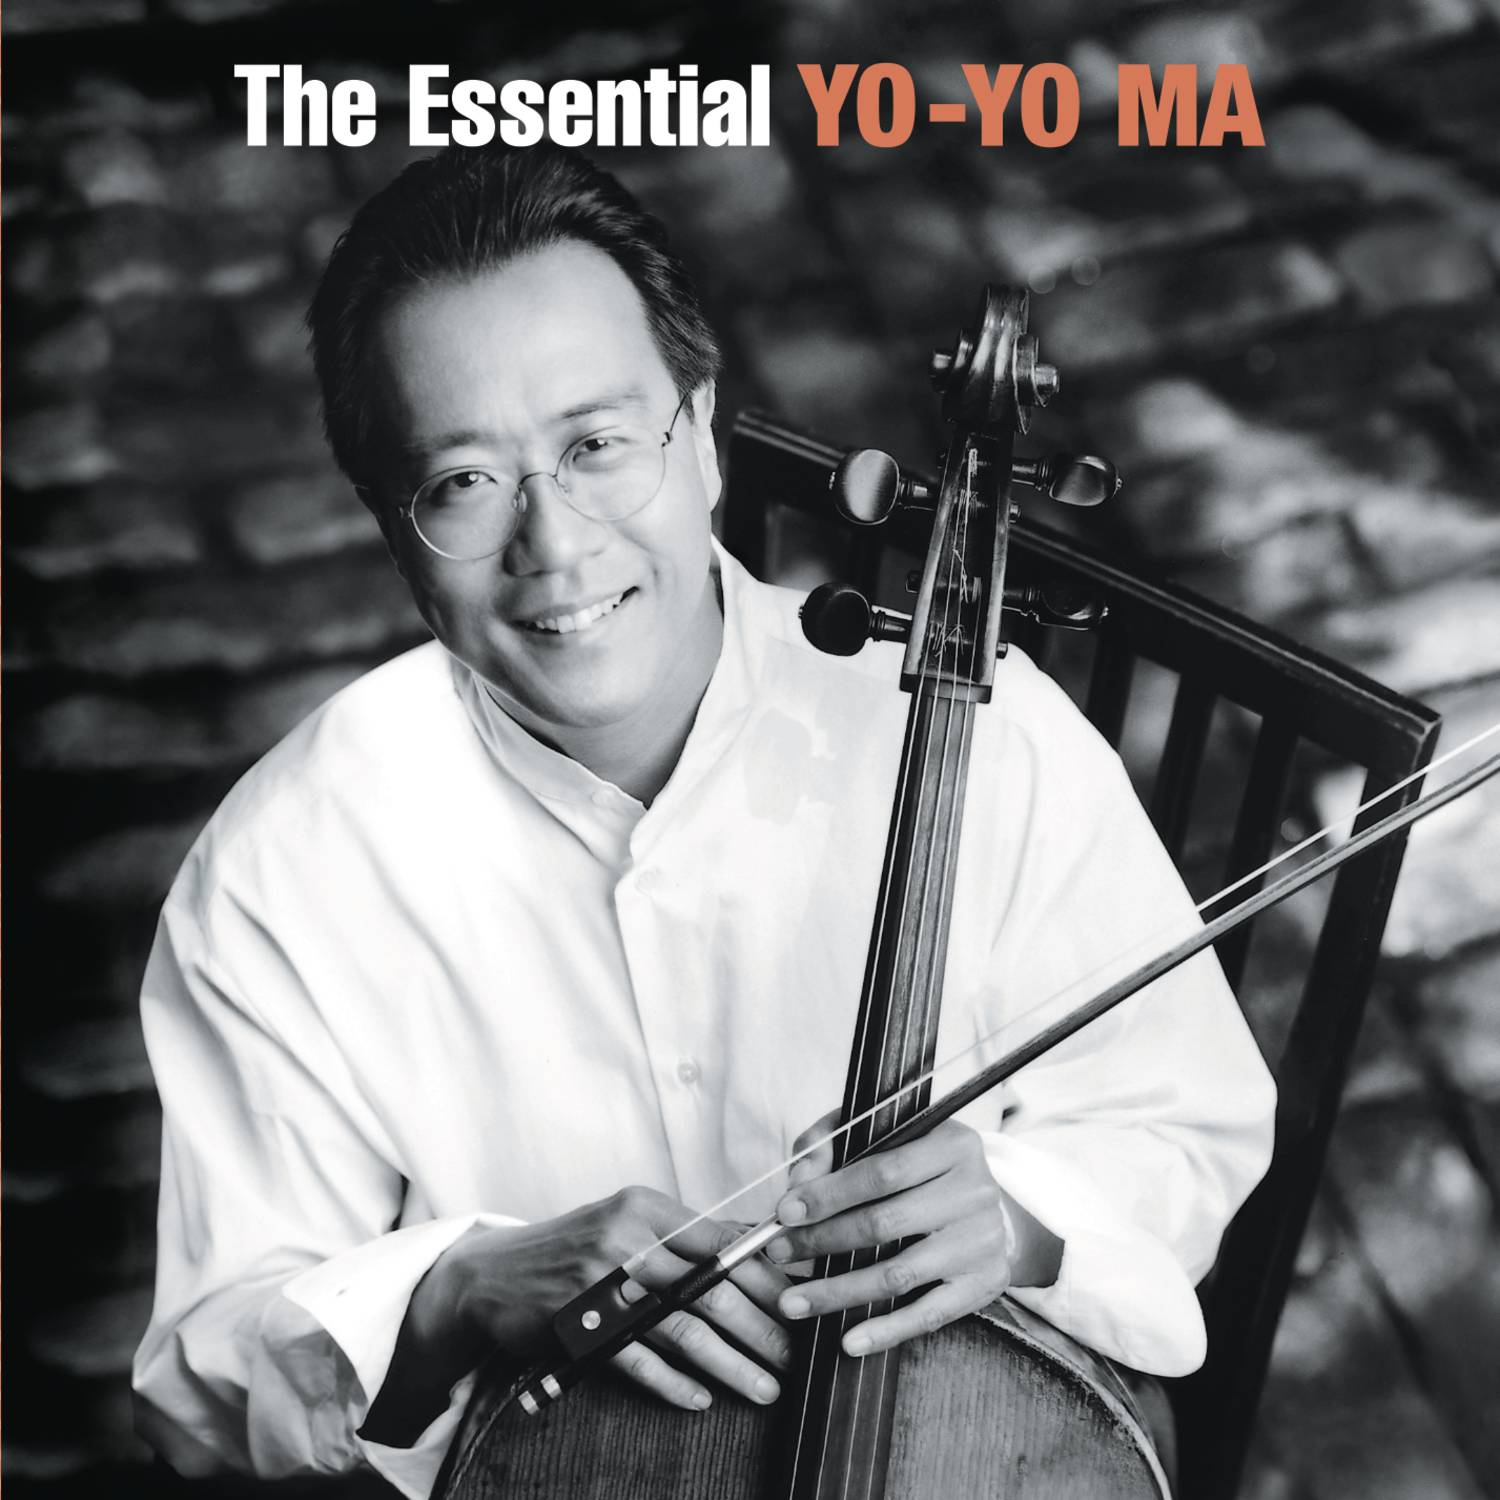 Concerto in G minor for 2 Cellos, Strings and Basso continuo, RV 531:I. Allegro